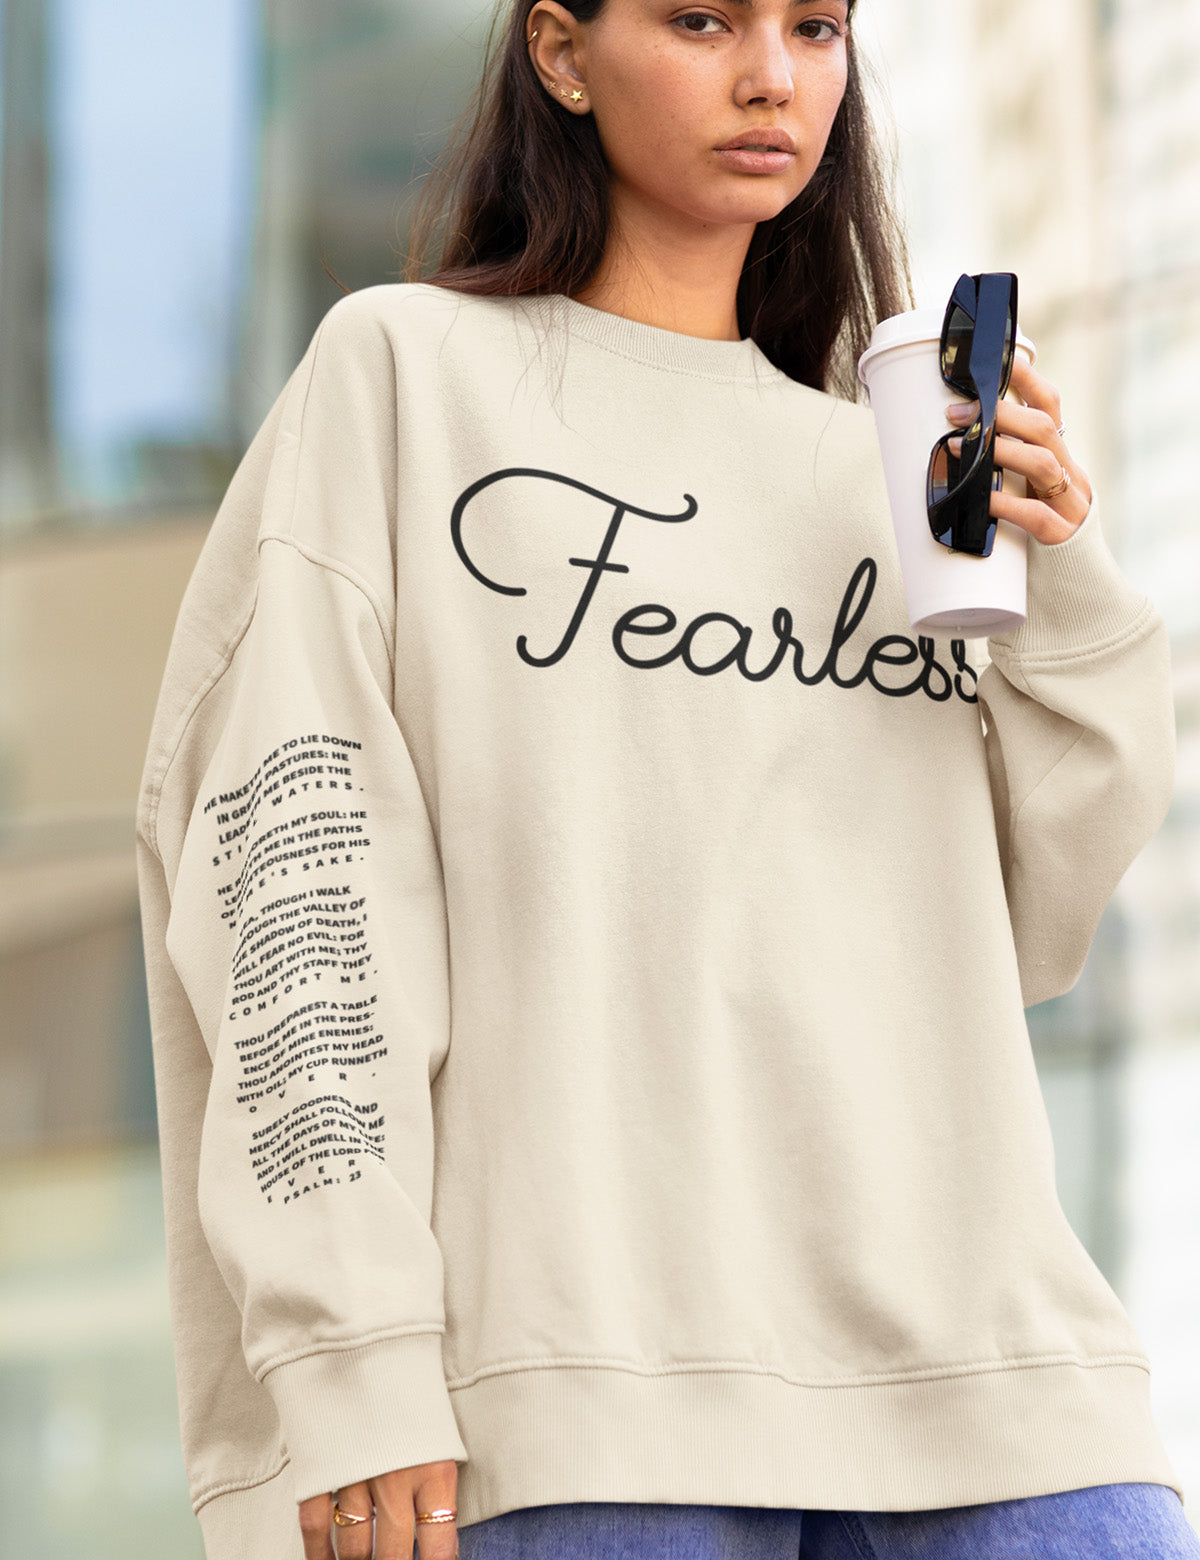 Fearless Trendy Bible Verse Christian Sweatshirt PSALM 23 With Sleeve Print